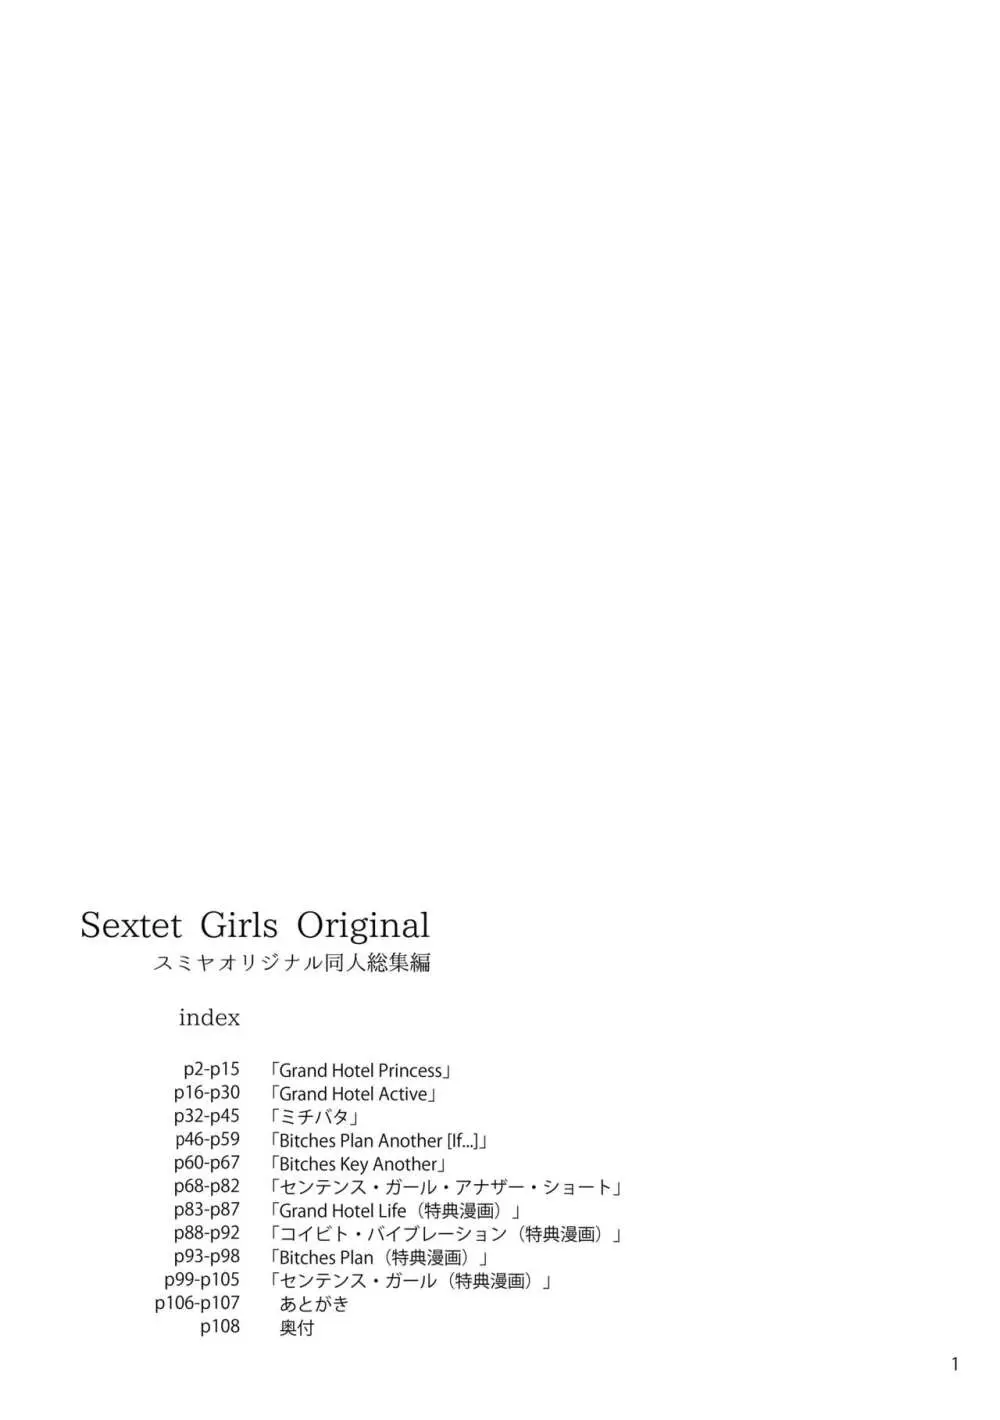 Sextet Girls Original -スミヤオリジナル同人総集編- 2ページ